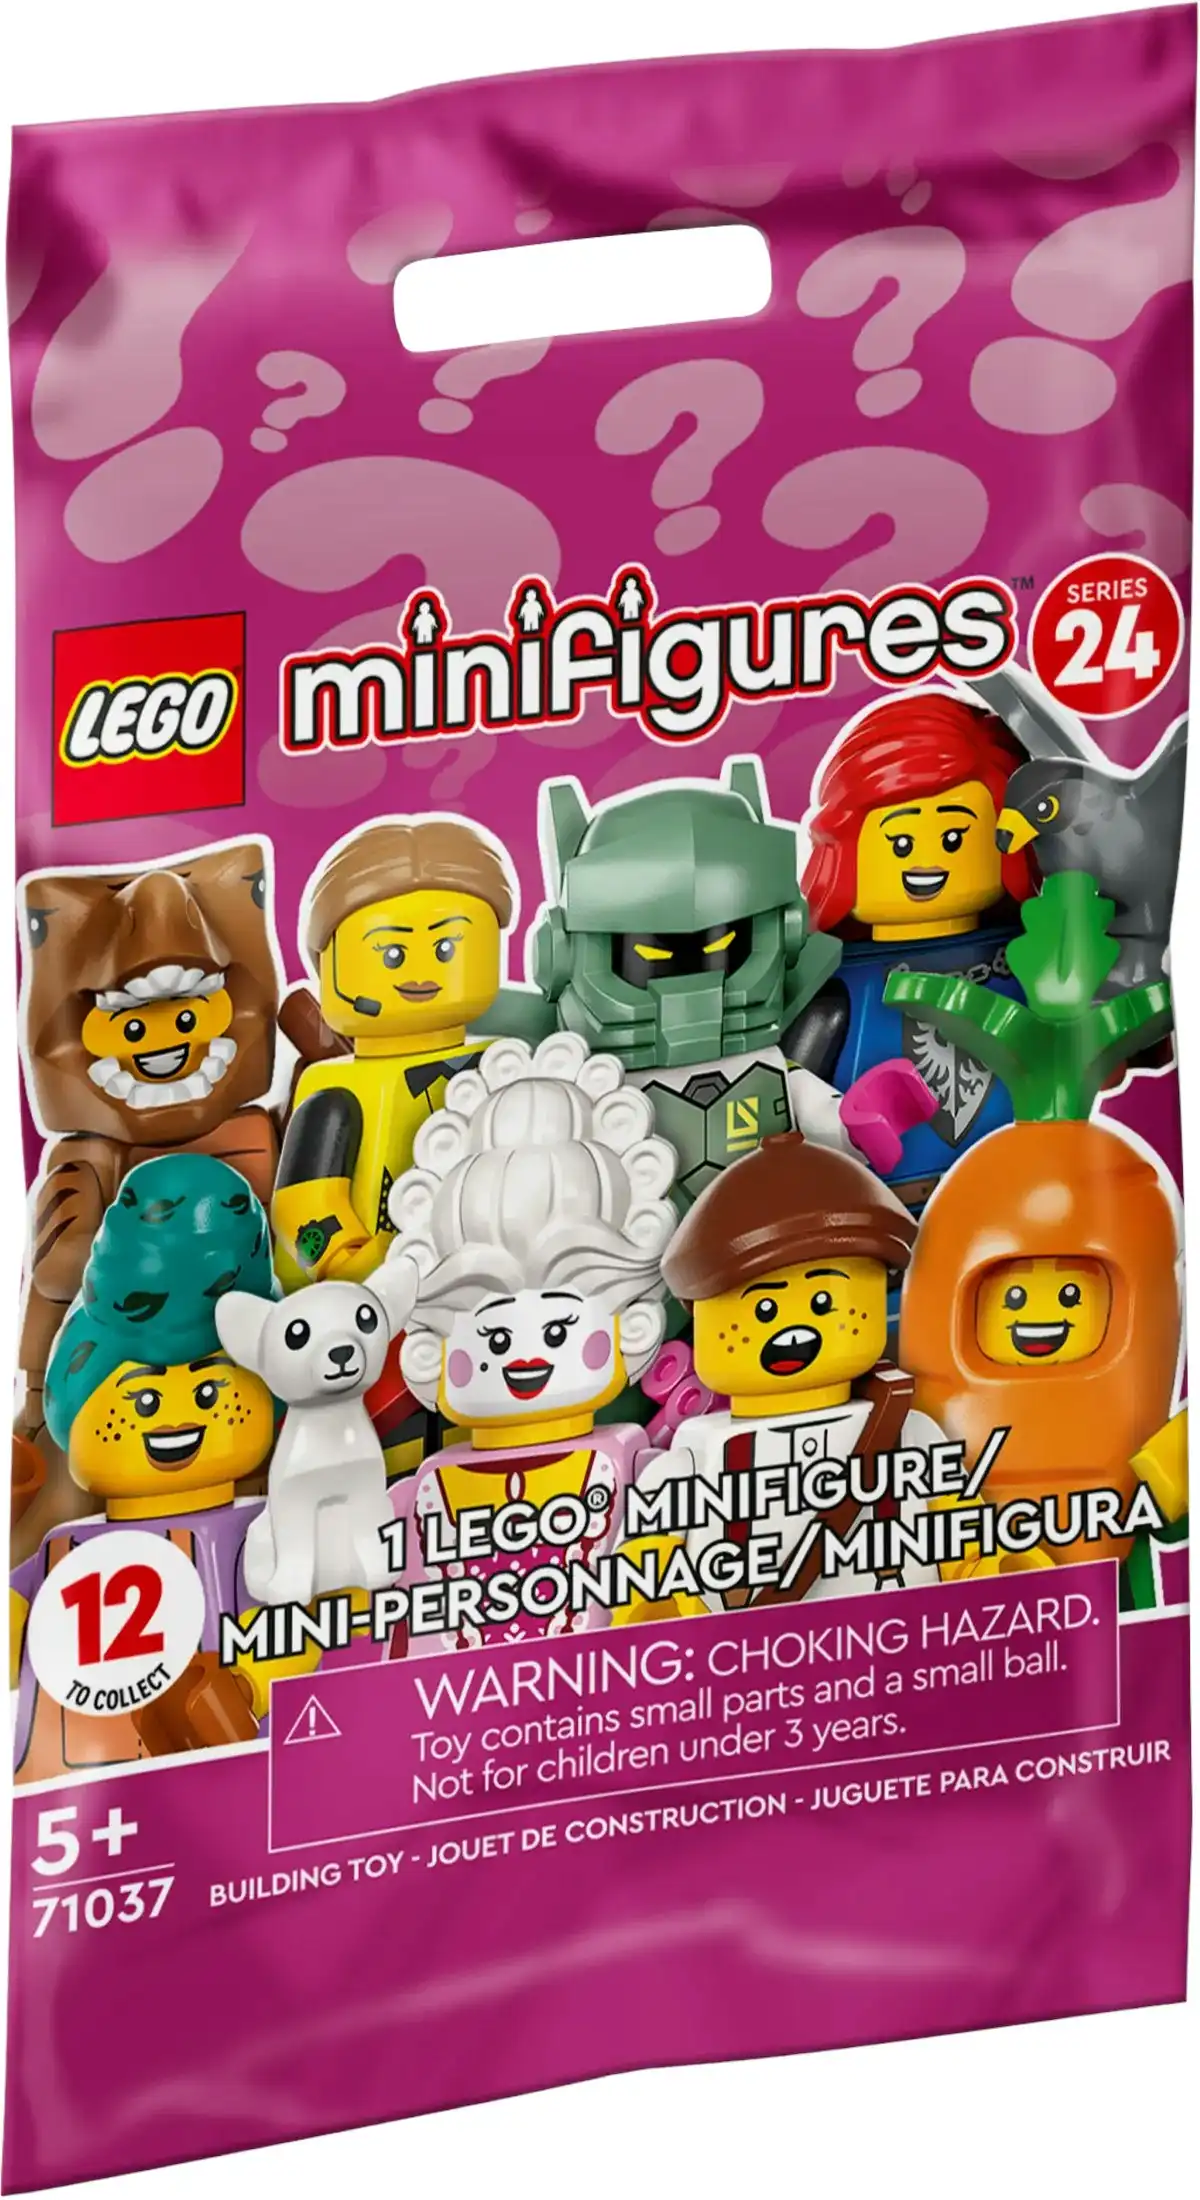 LEGO 71037 - Minifigures Series 24 - Minifigures